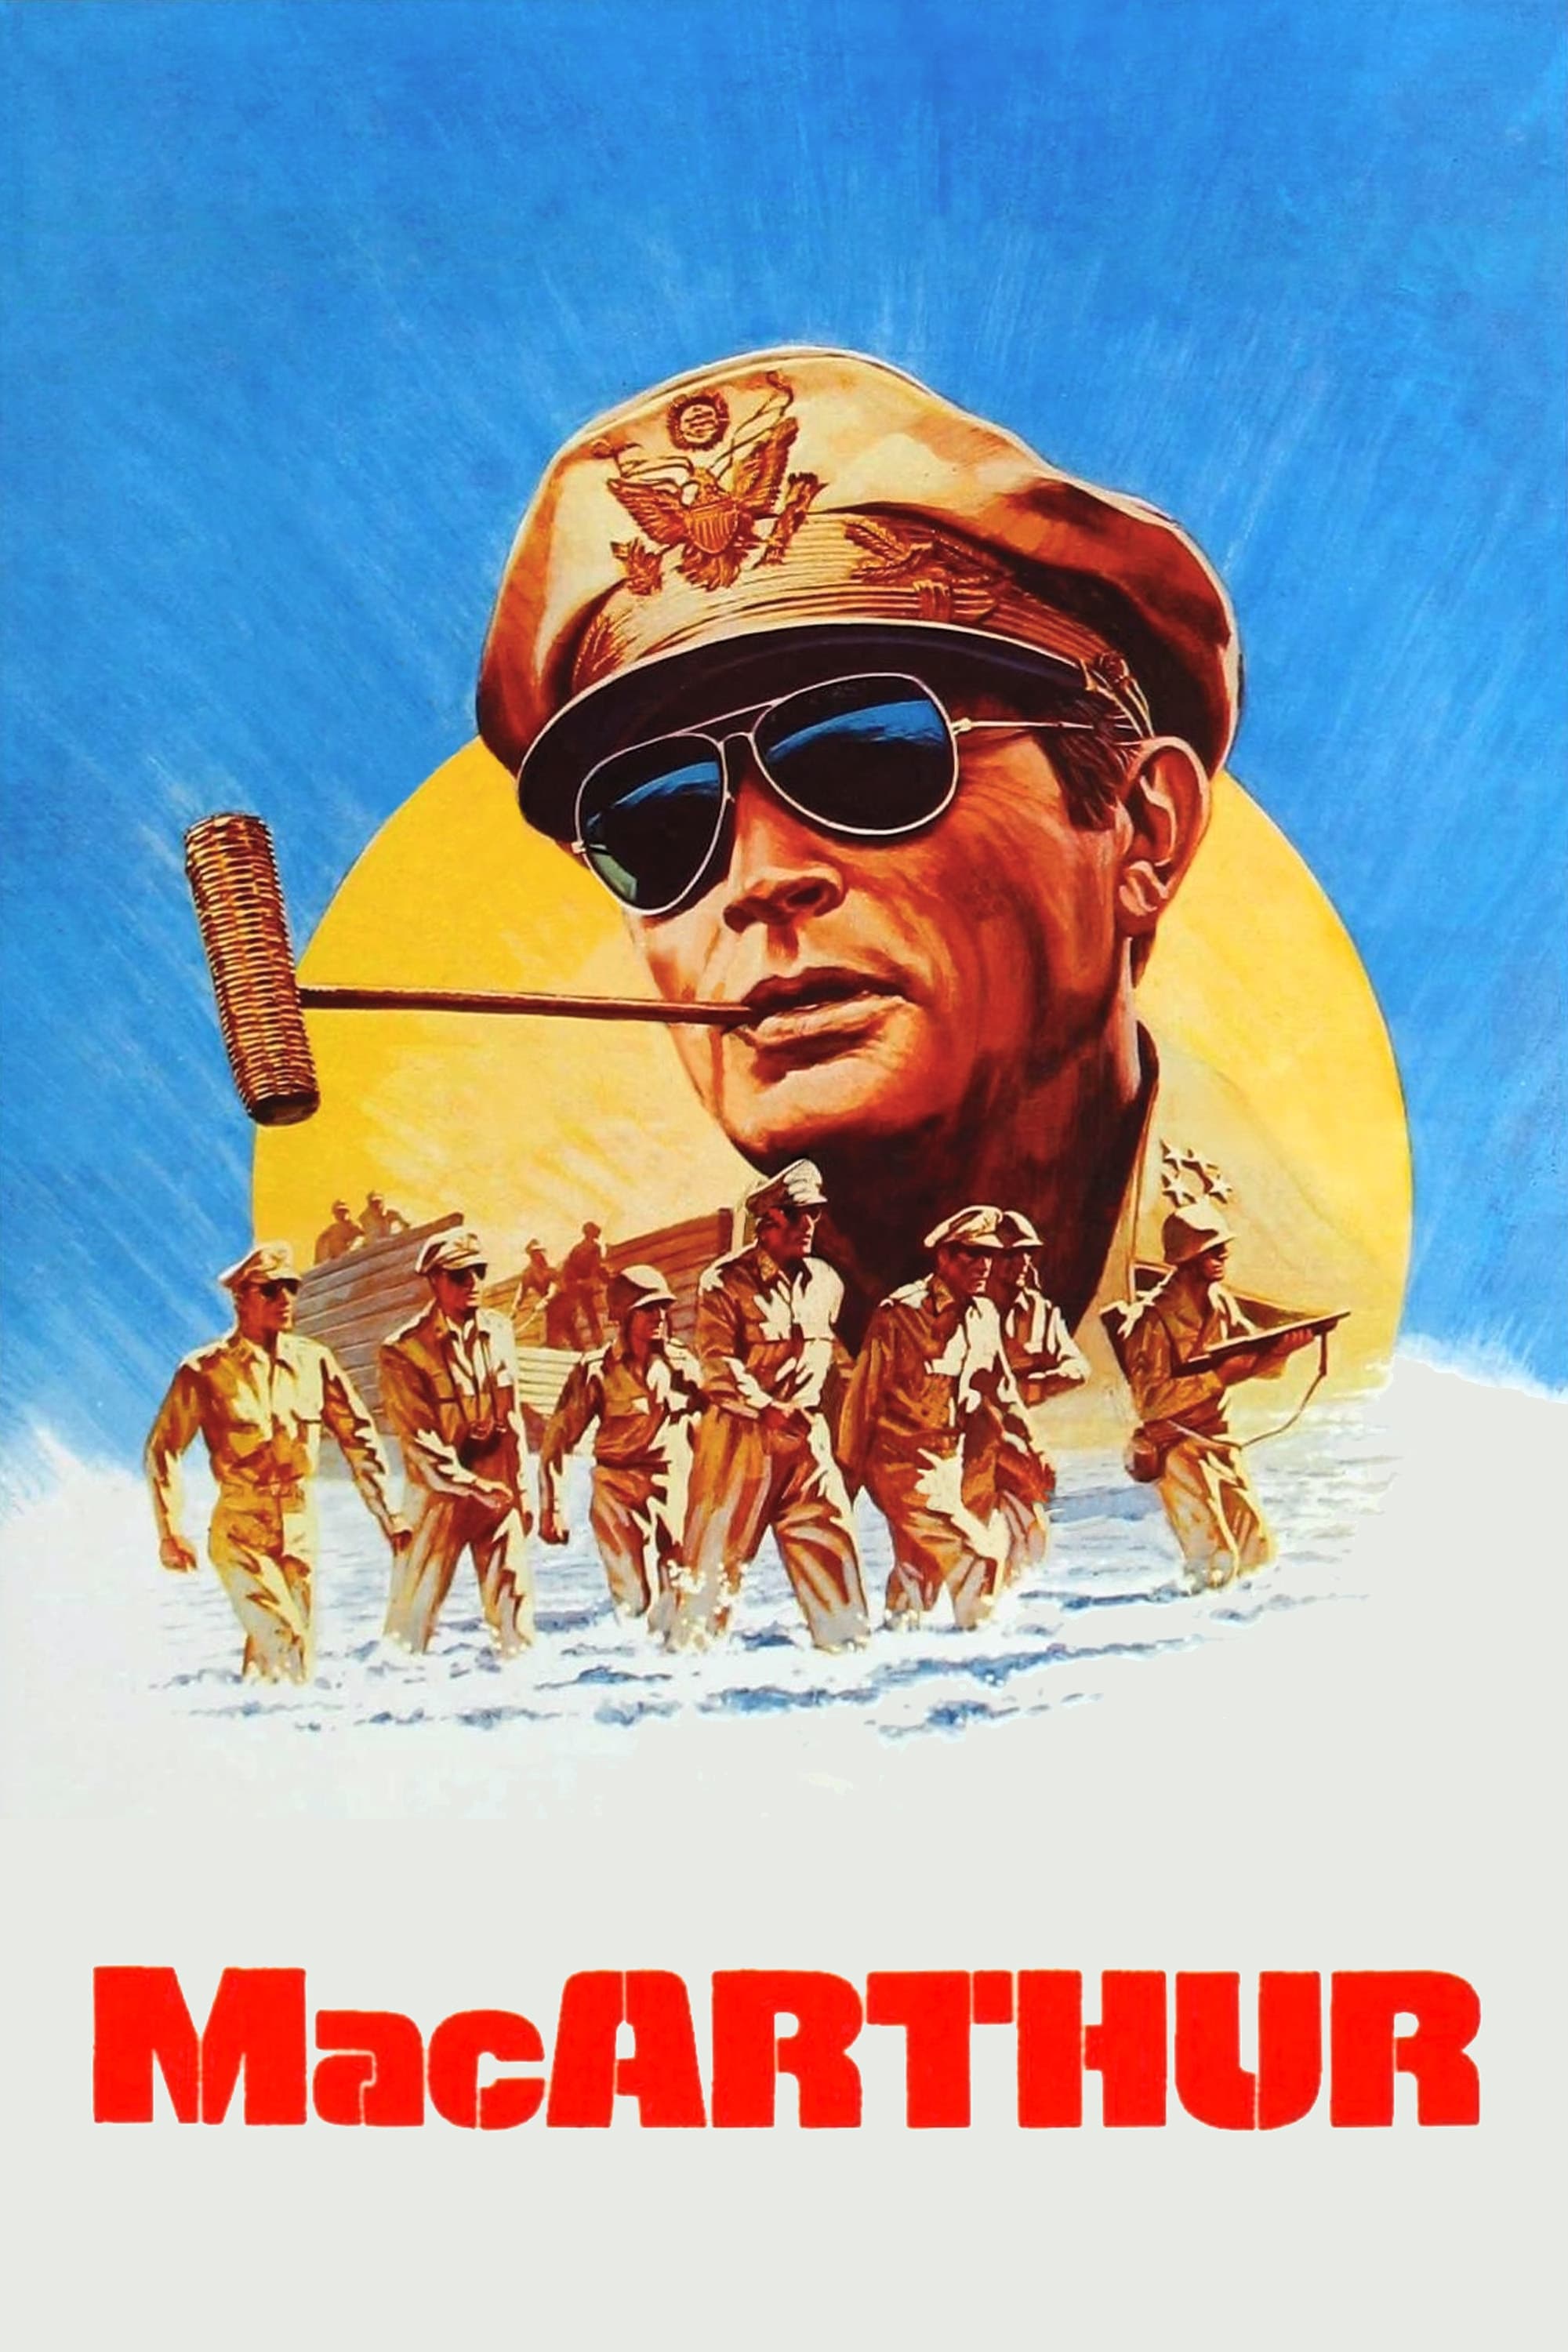 MacArthur, O General Rebelde (1977)